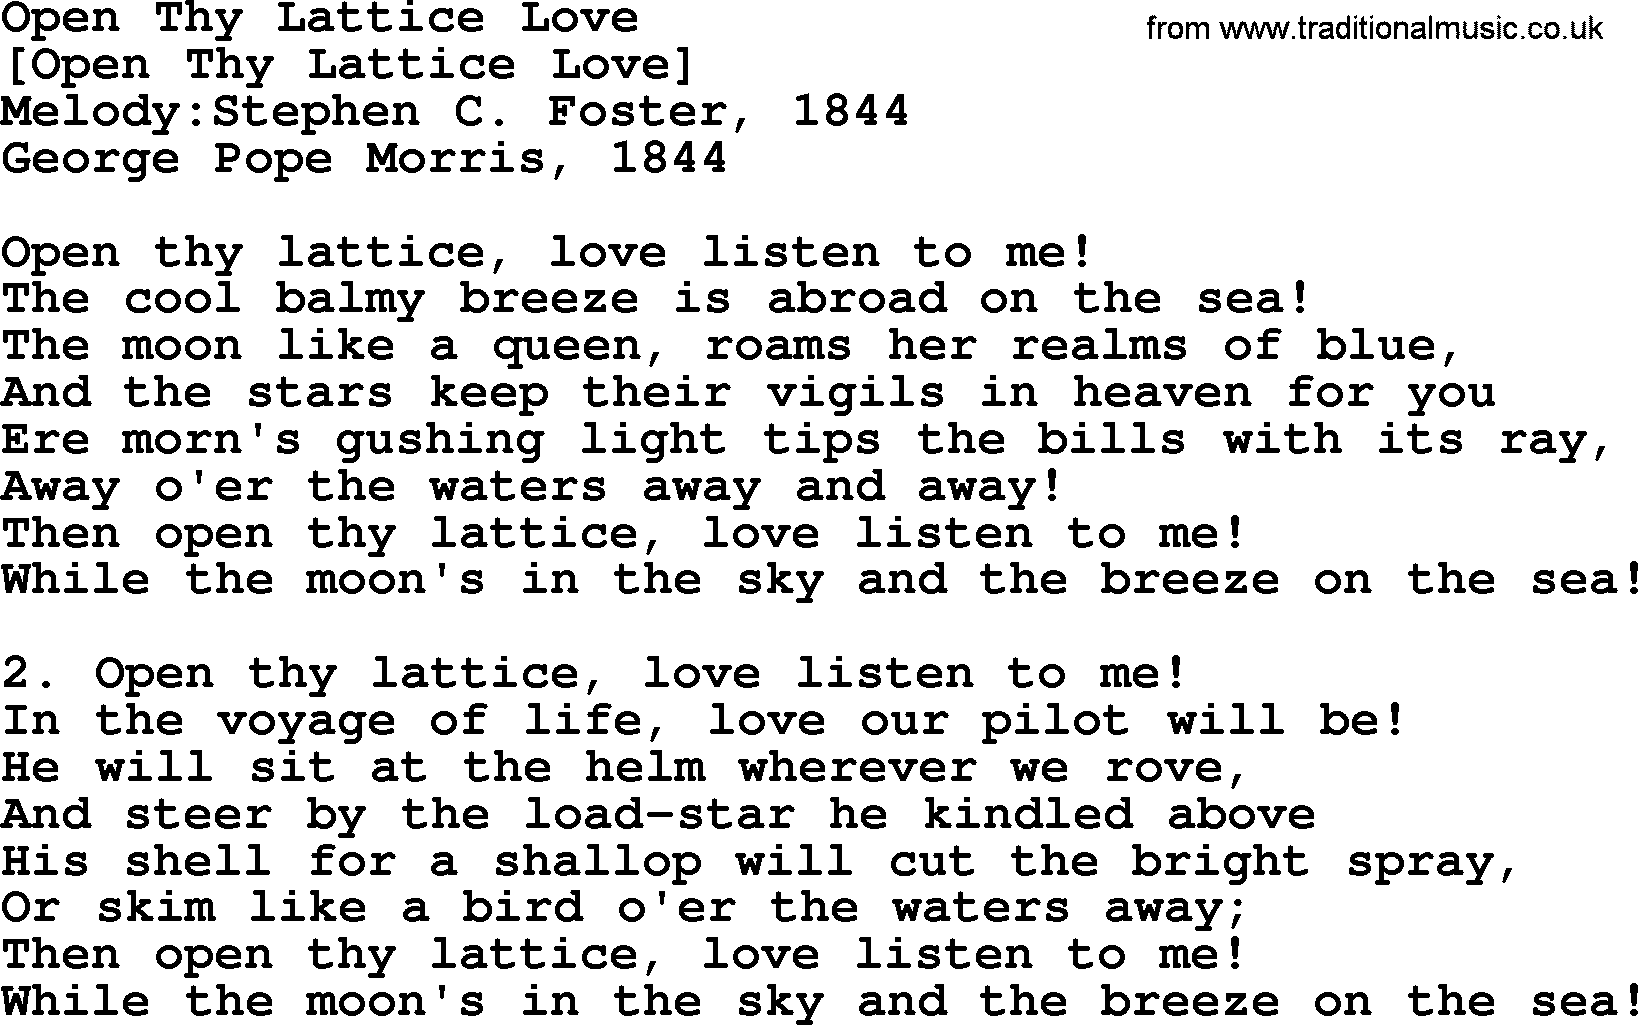 Old American Song: Open Thy Lattice Love, lyrics